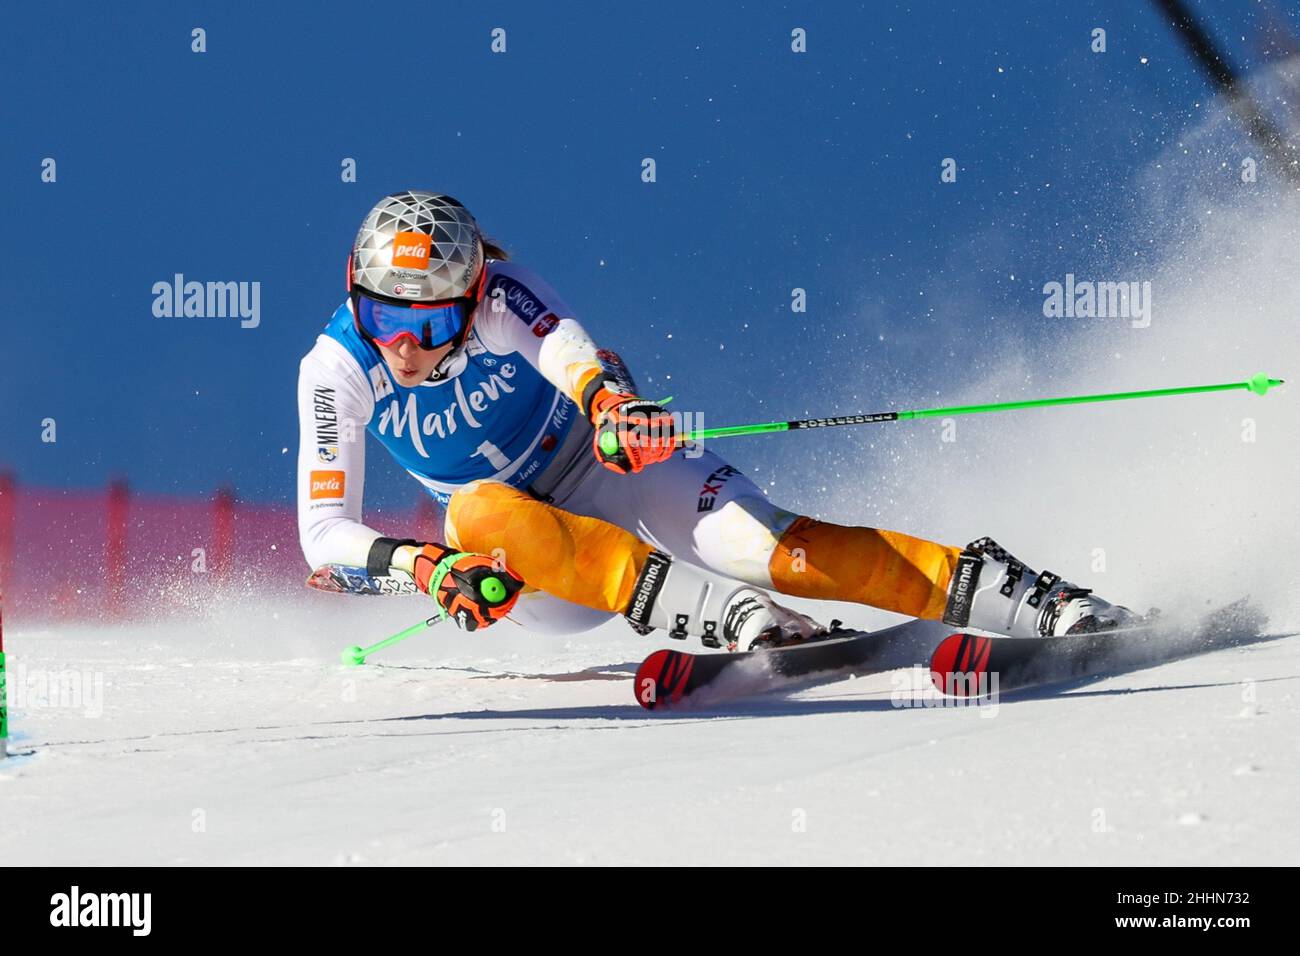 Kronplatz, Italien. 25th Januar 2022. Petra VLHOVA (SVK) während des FIS Ski World Cup 2022 - Riesenslalom der Frauen, alpines Skirennen auf dem Kronplatz, Italien, Januar 25 2022 Quelle: Independent Photo Agency/Alamy Live News Stockfoto